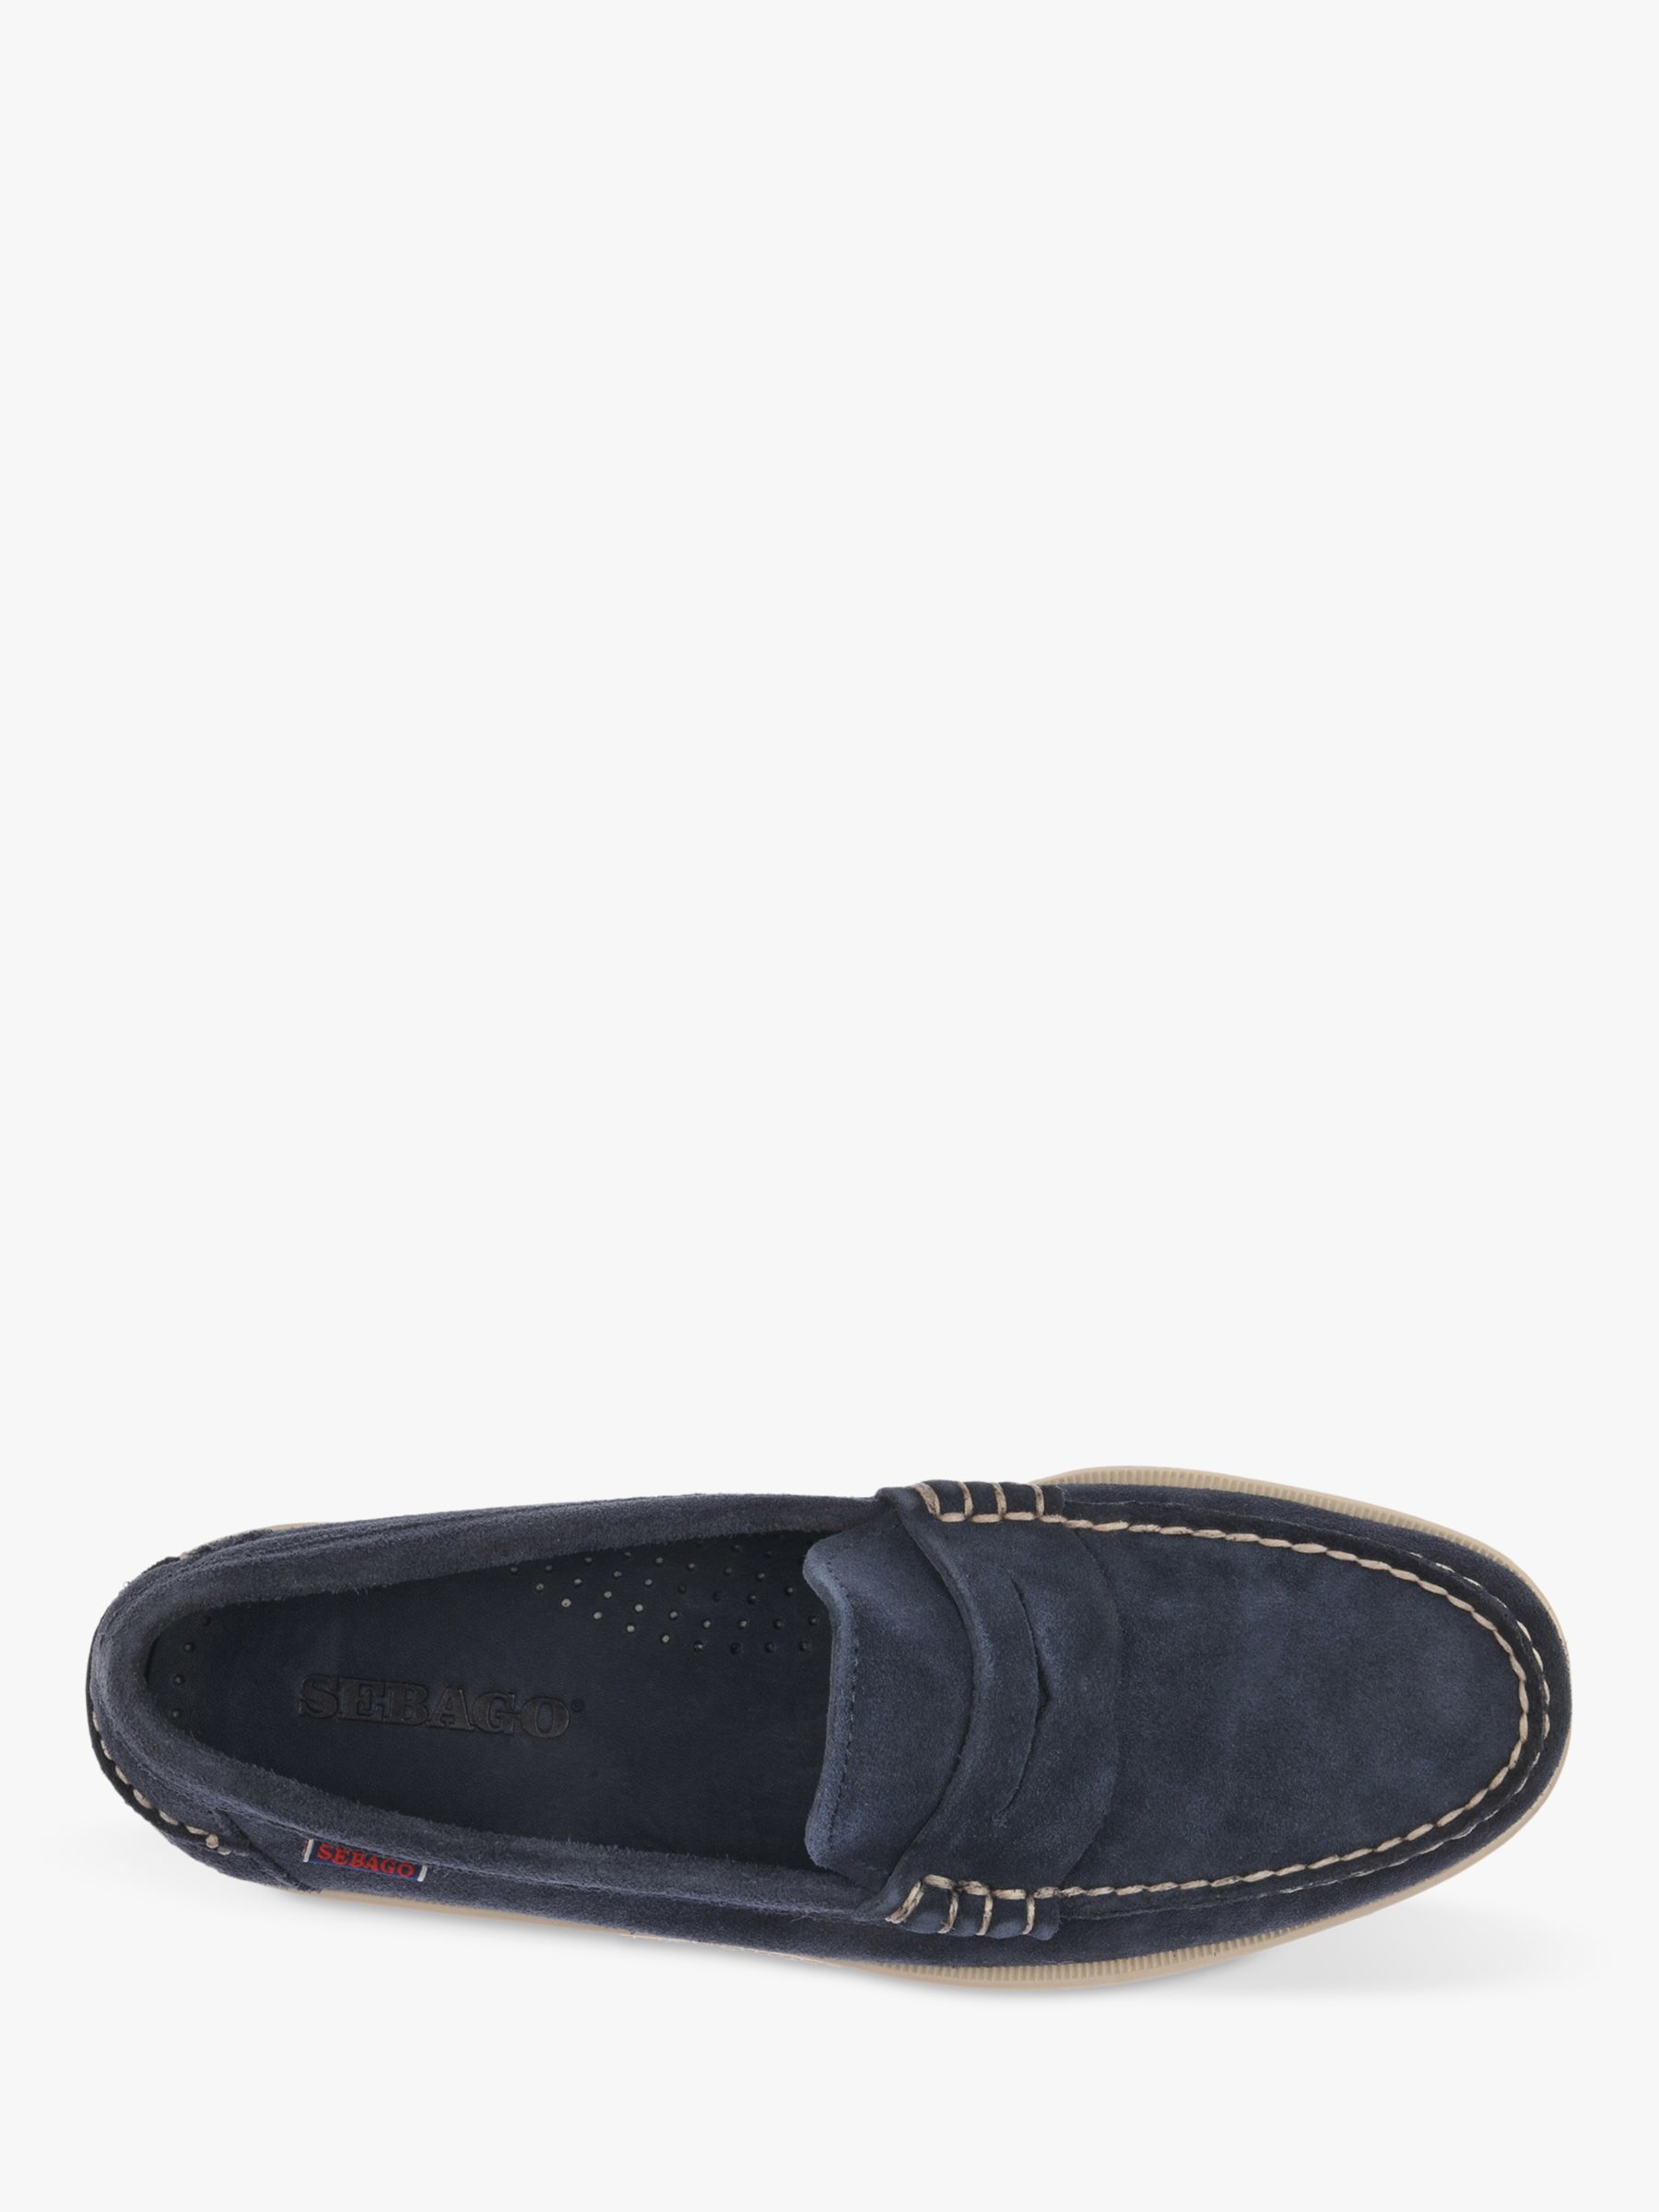 Sebago Dan Leather Boat Loafers, Blue Navy, 7